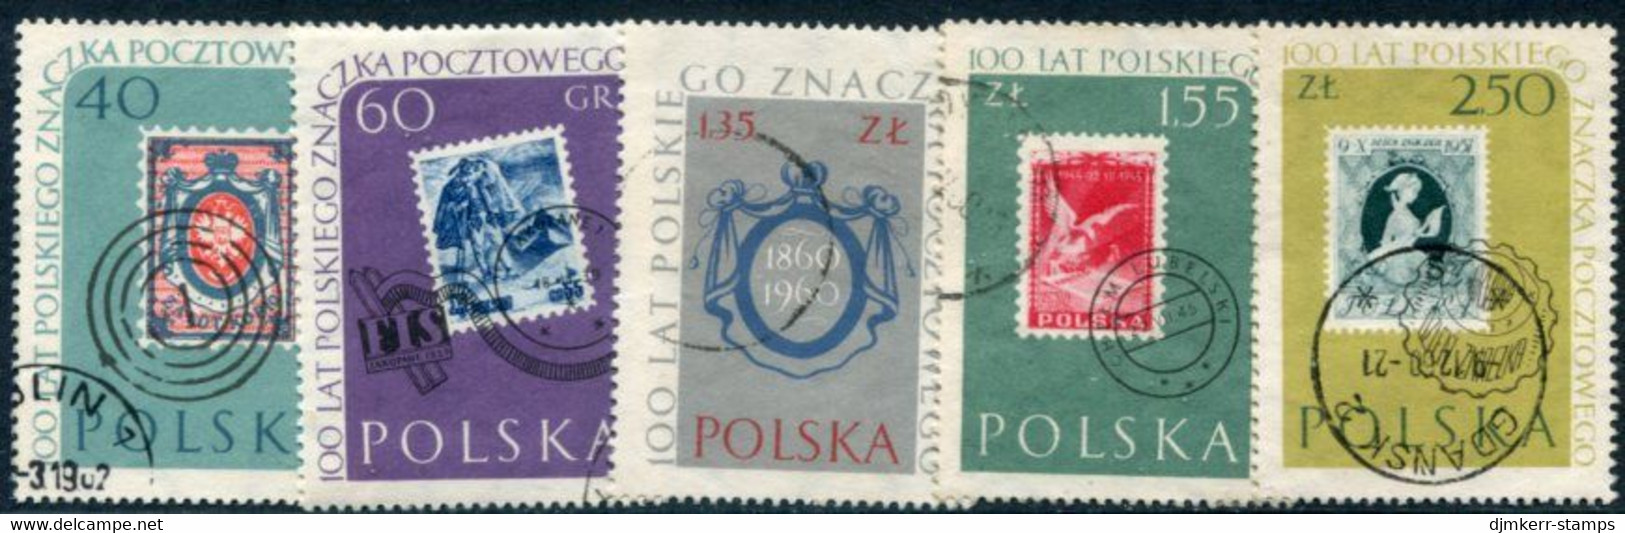 POLAND 1960 Stamp Centenary Set Used.  Michel 1151-55 - Gebruikt